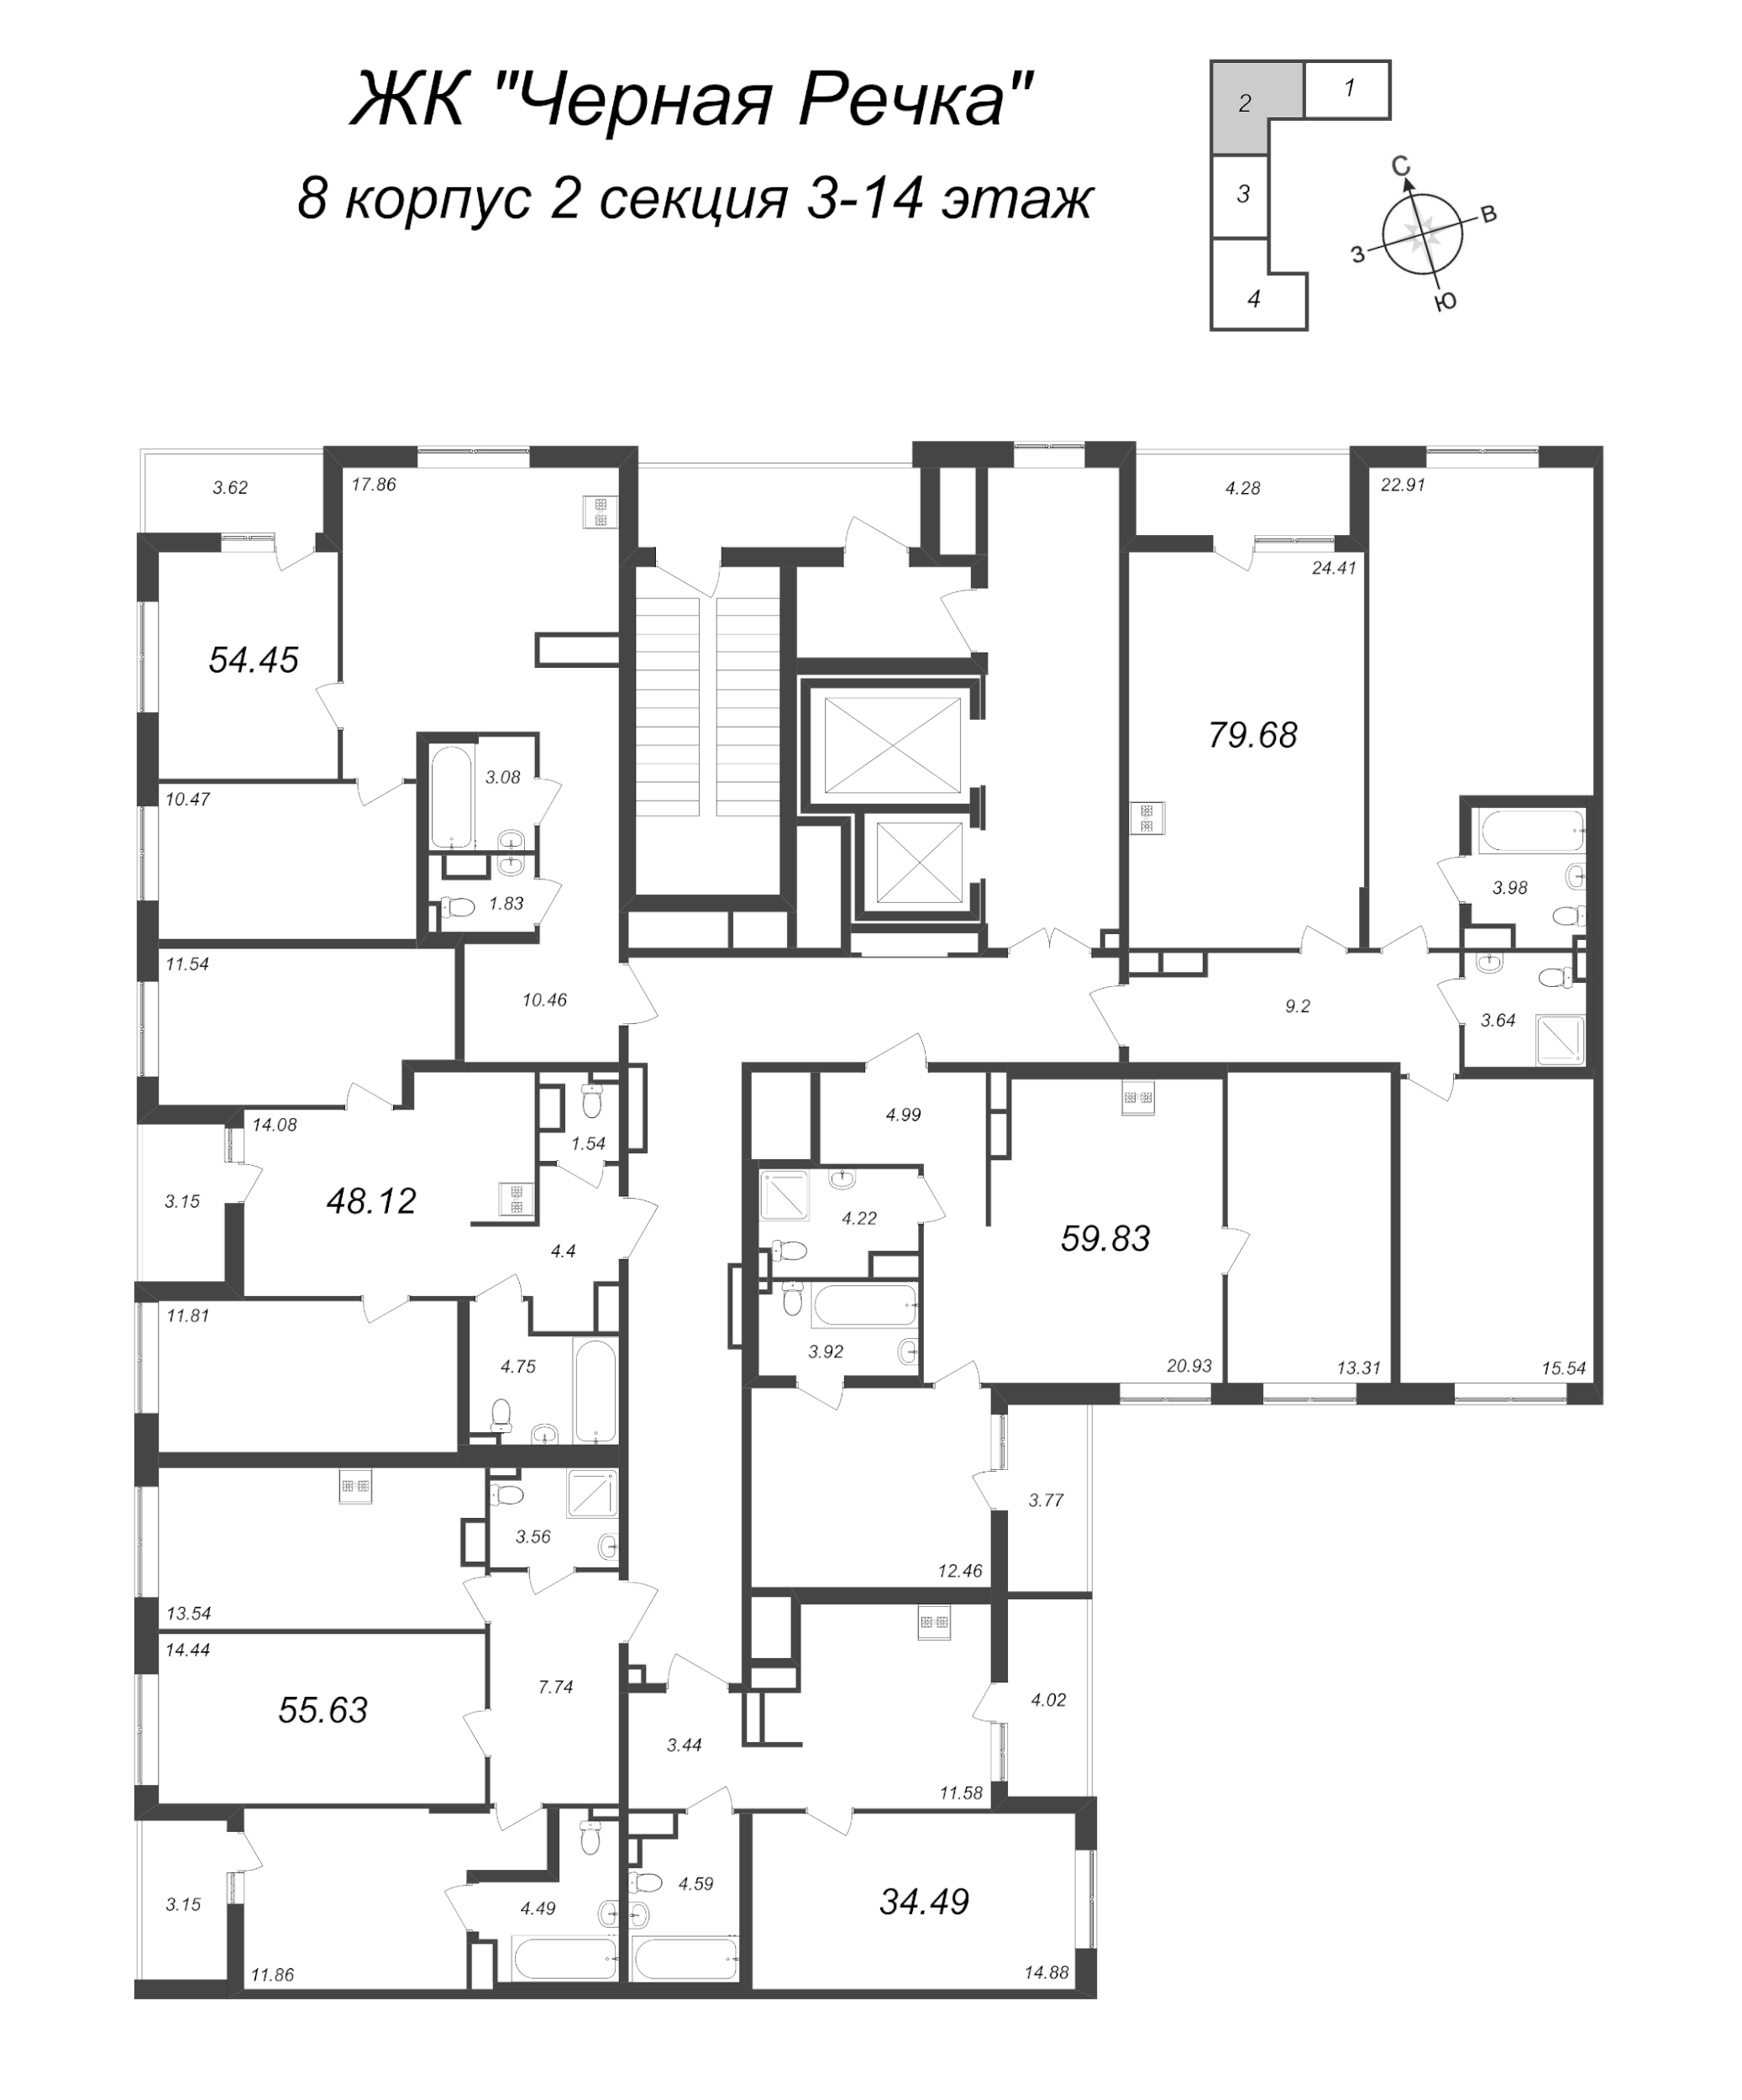 3-комнатная (Евро) квартира, 79.68 м² - планировка этажа